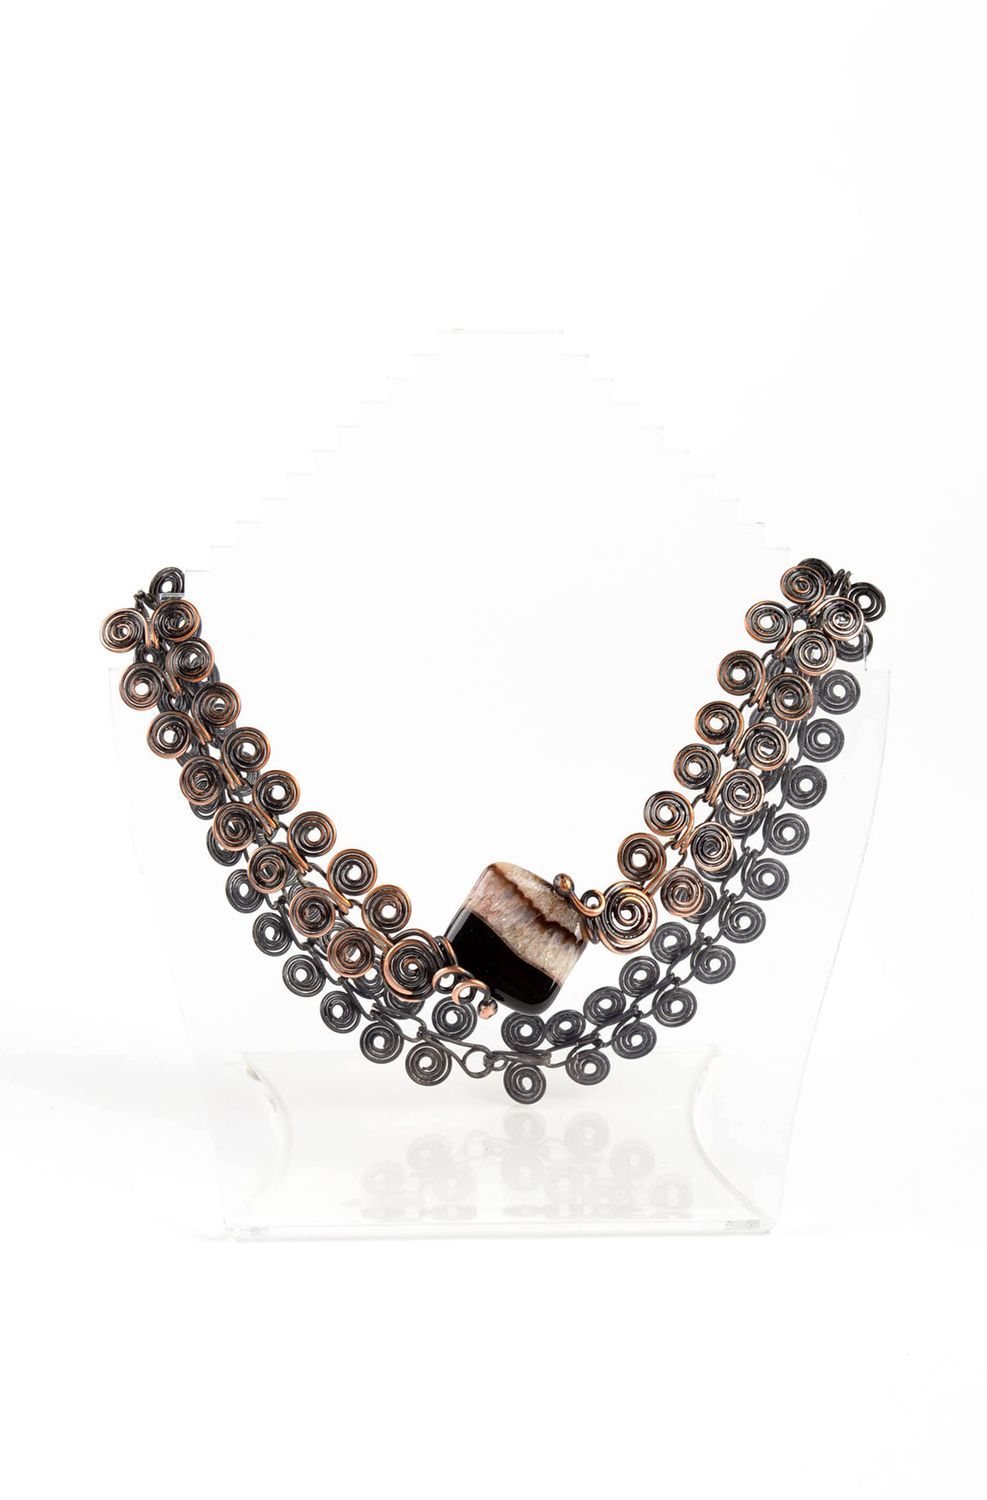 Handmade necklace unusual necklace designer accessory copper jewelry gift ideas photo 1